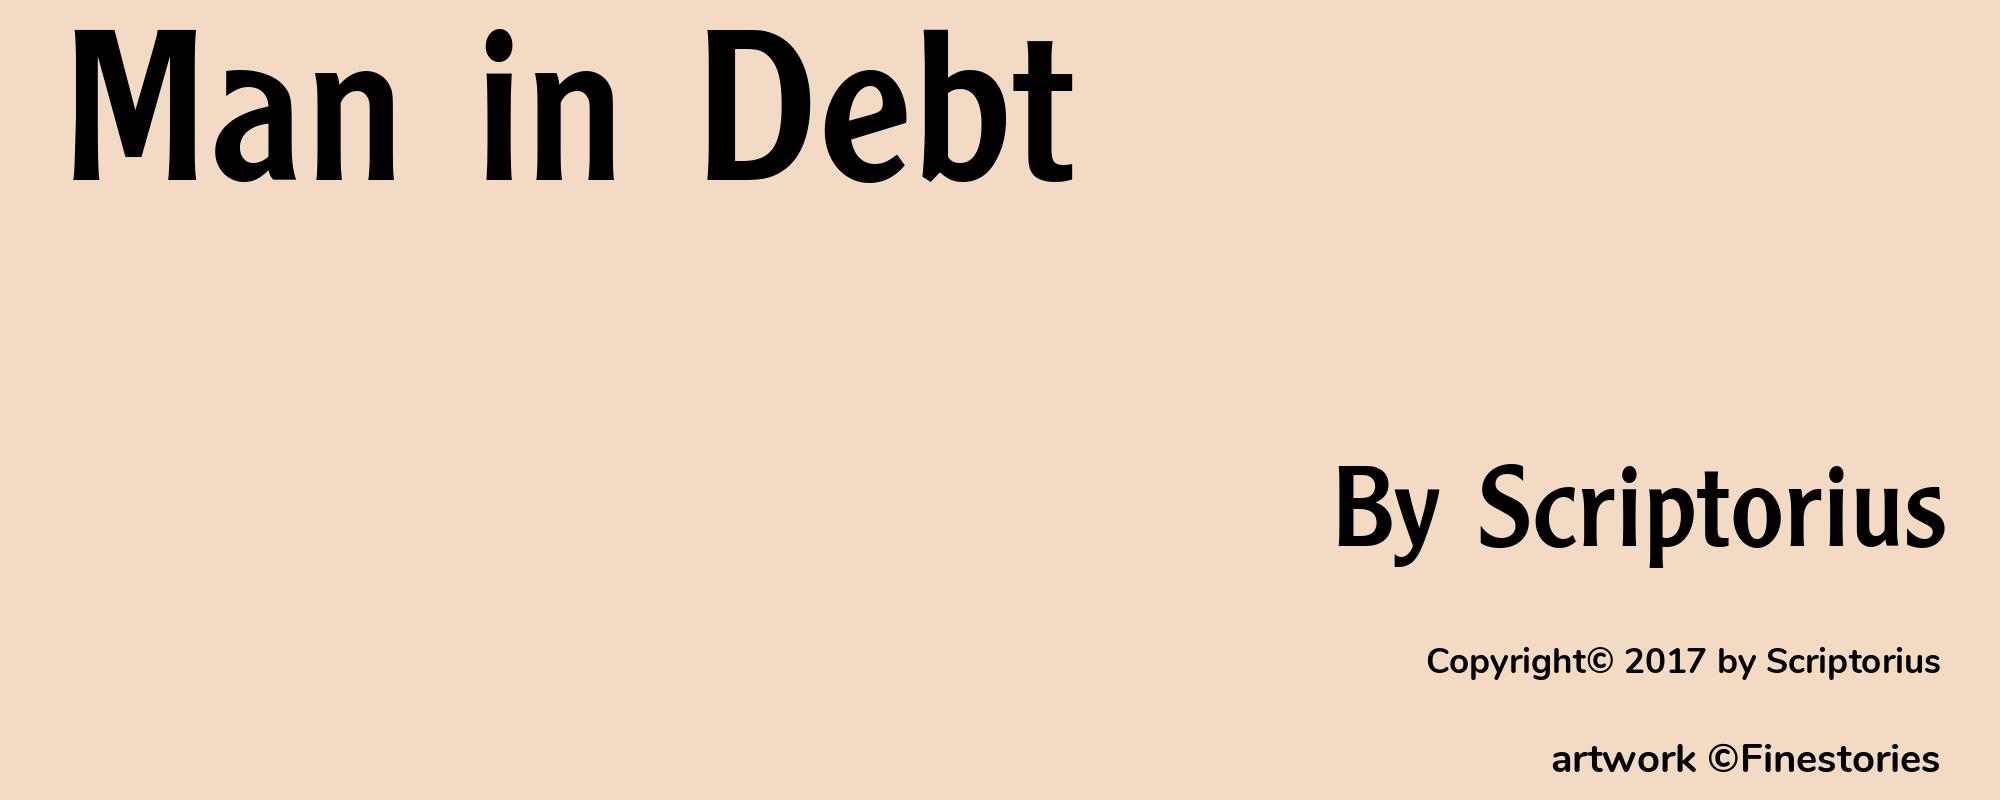 Man in Debt - Cover